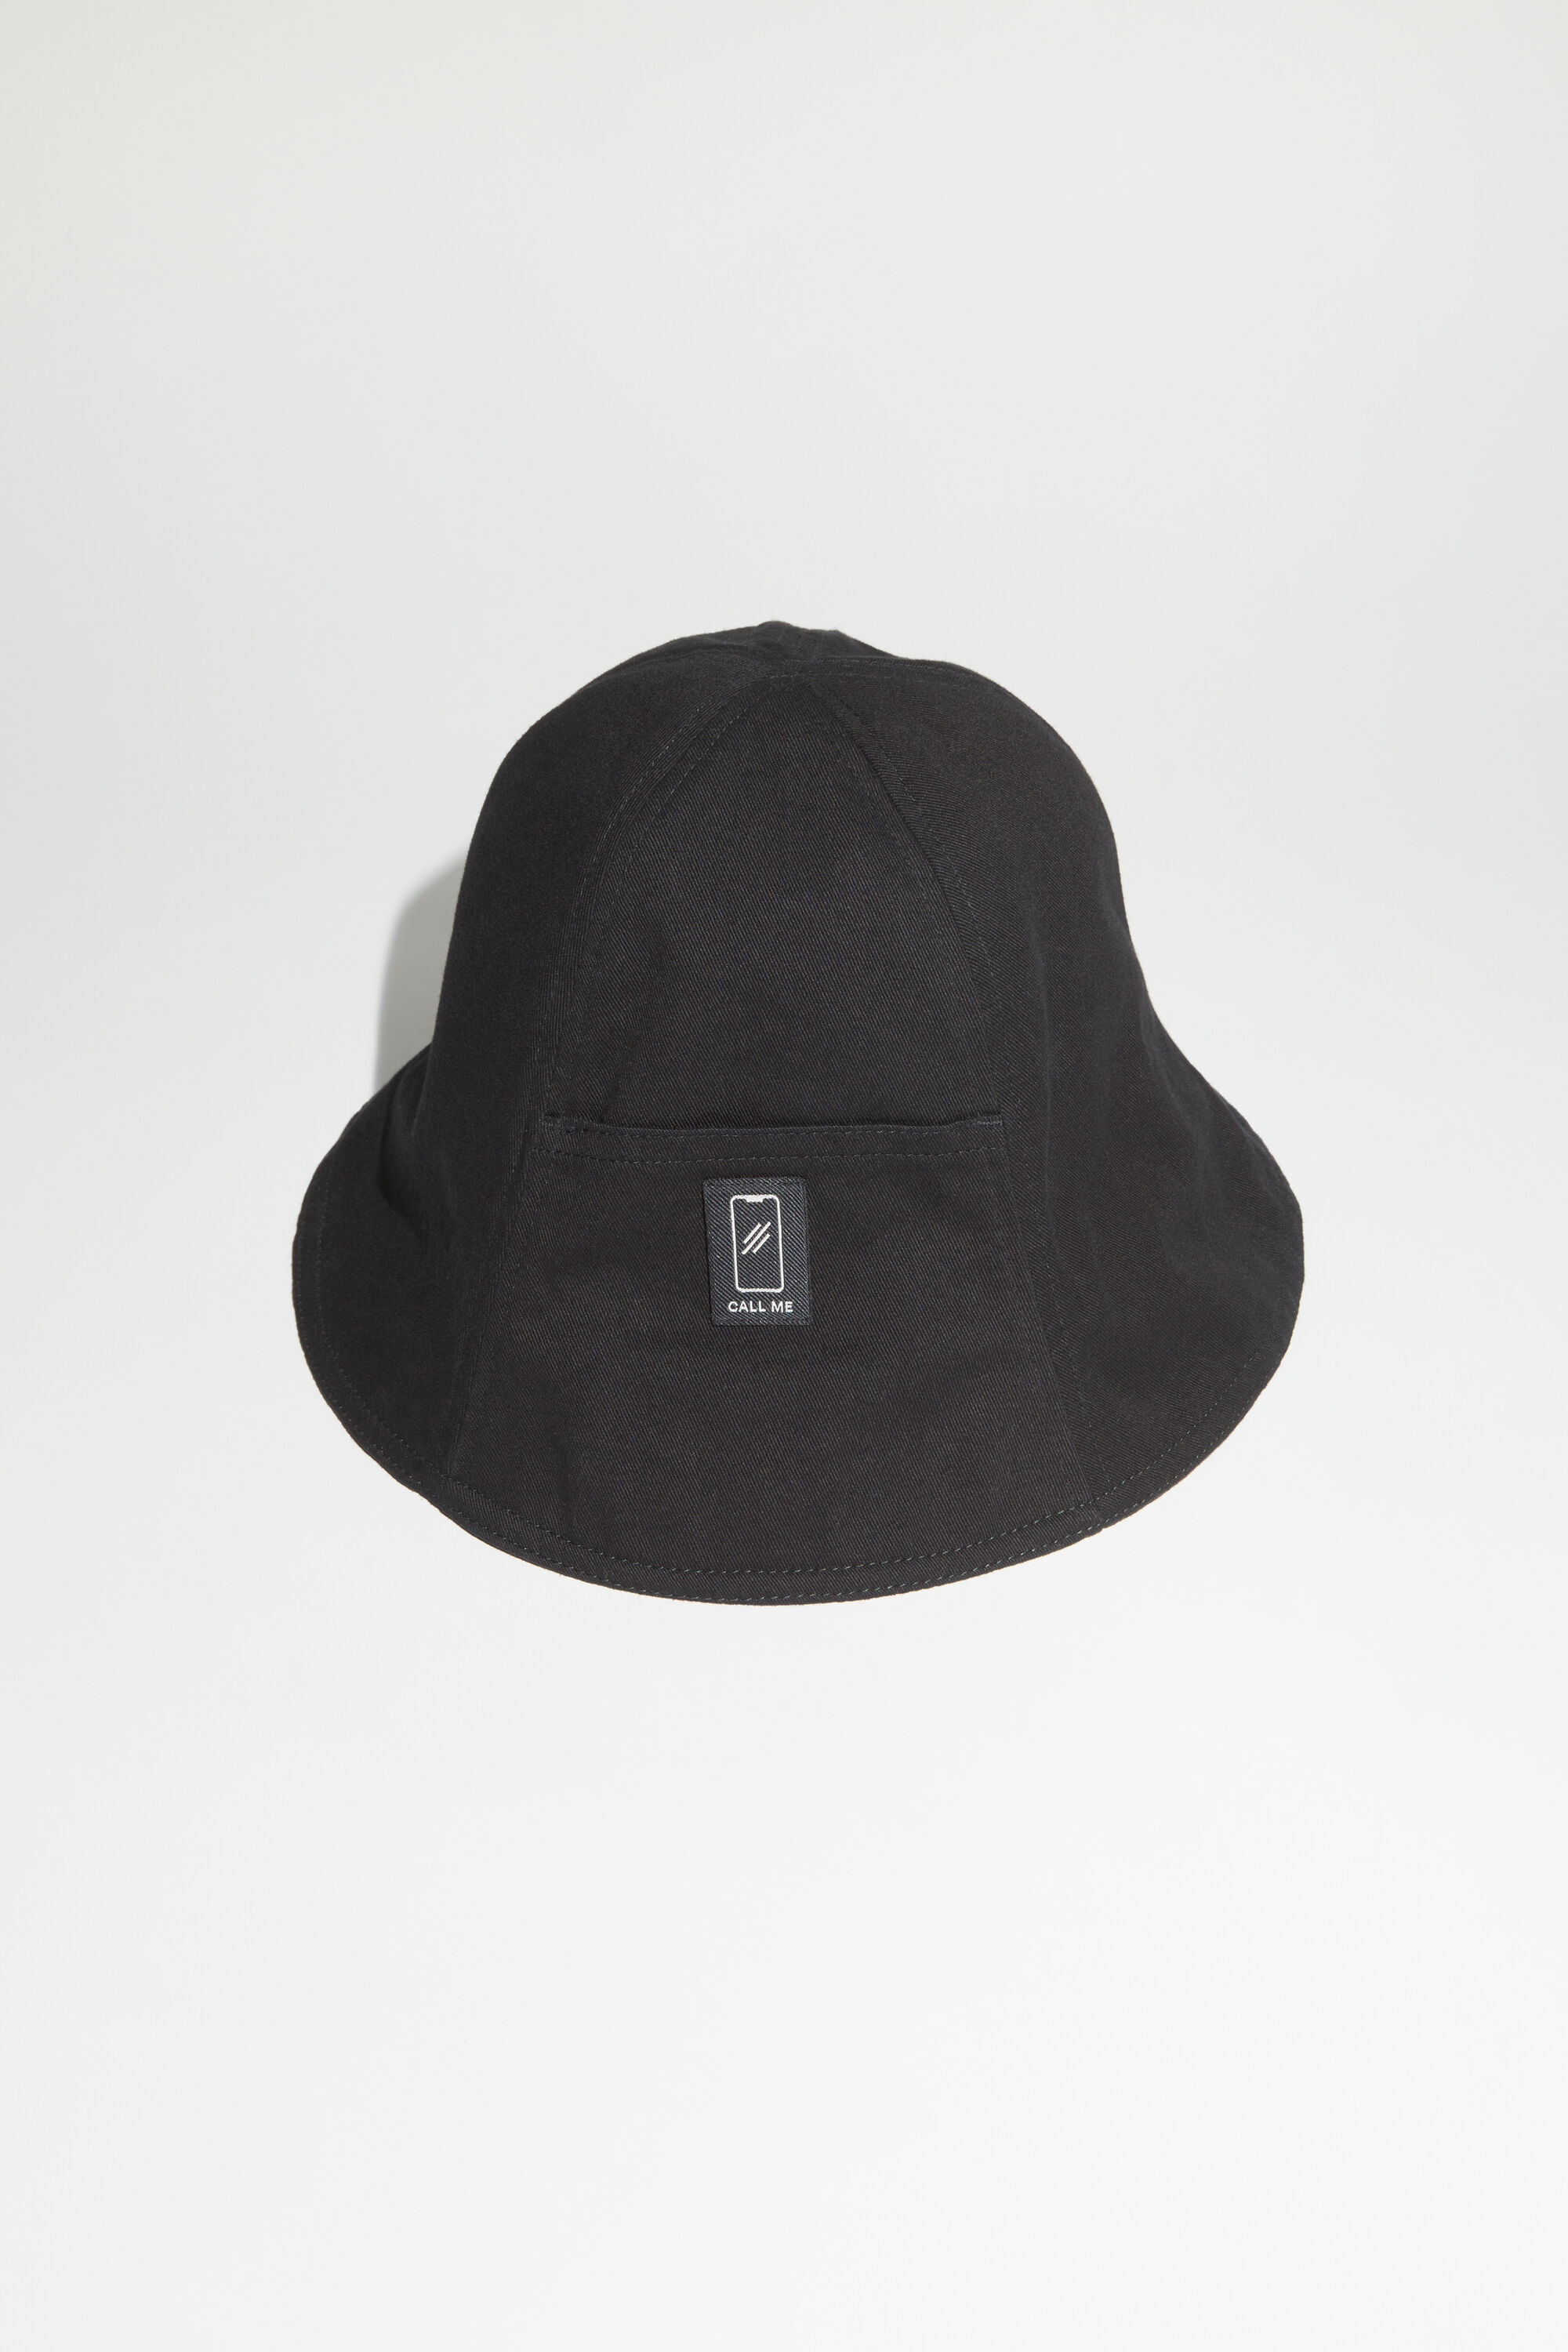 Acne Studios - Bucket hat - Black